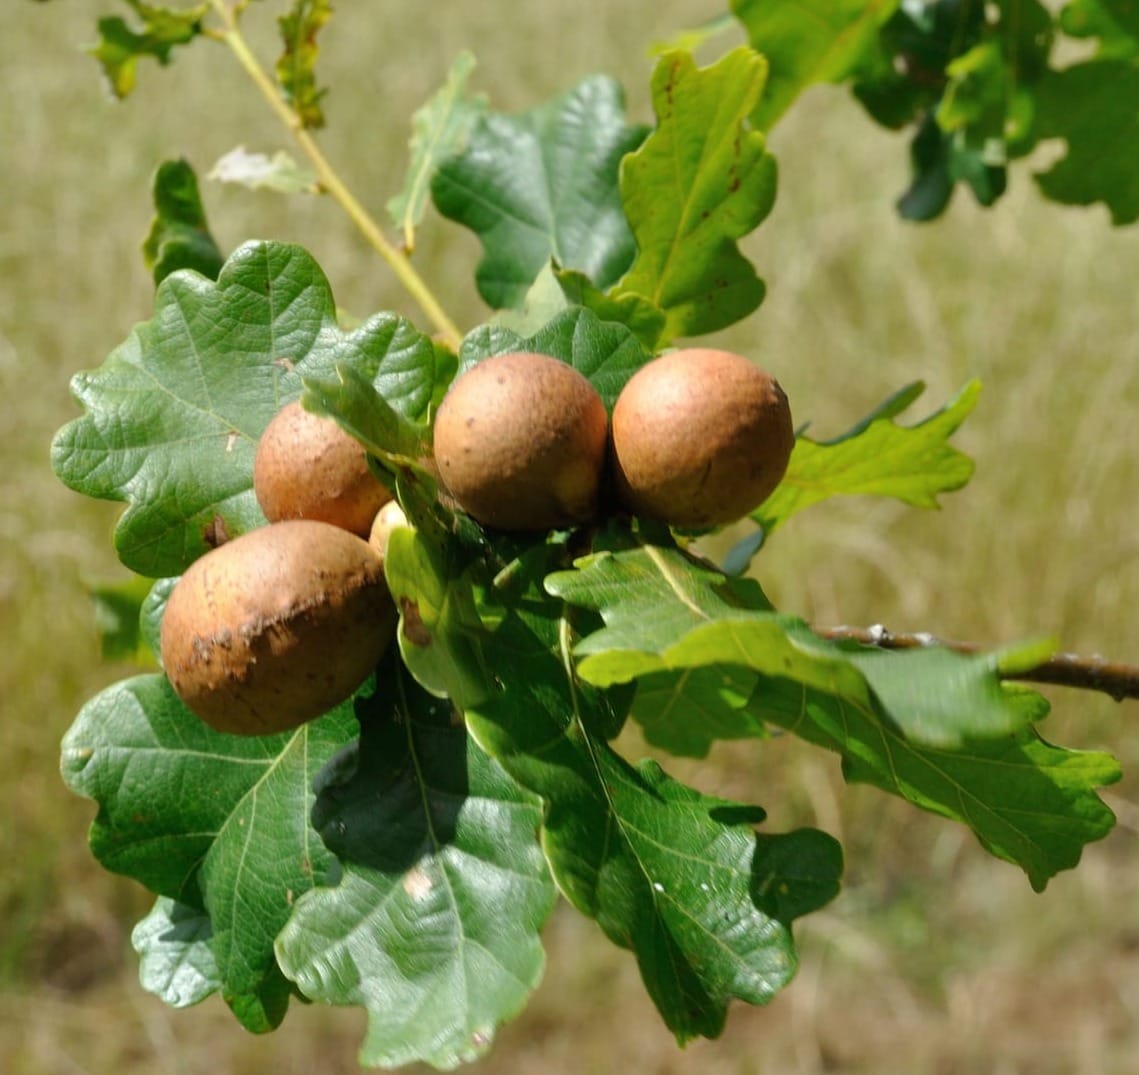 brown bulbous protrusions on an oak leaf